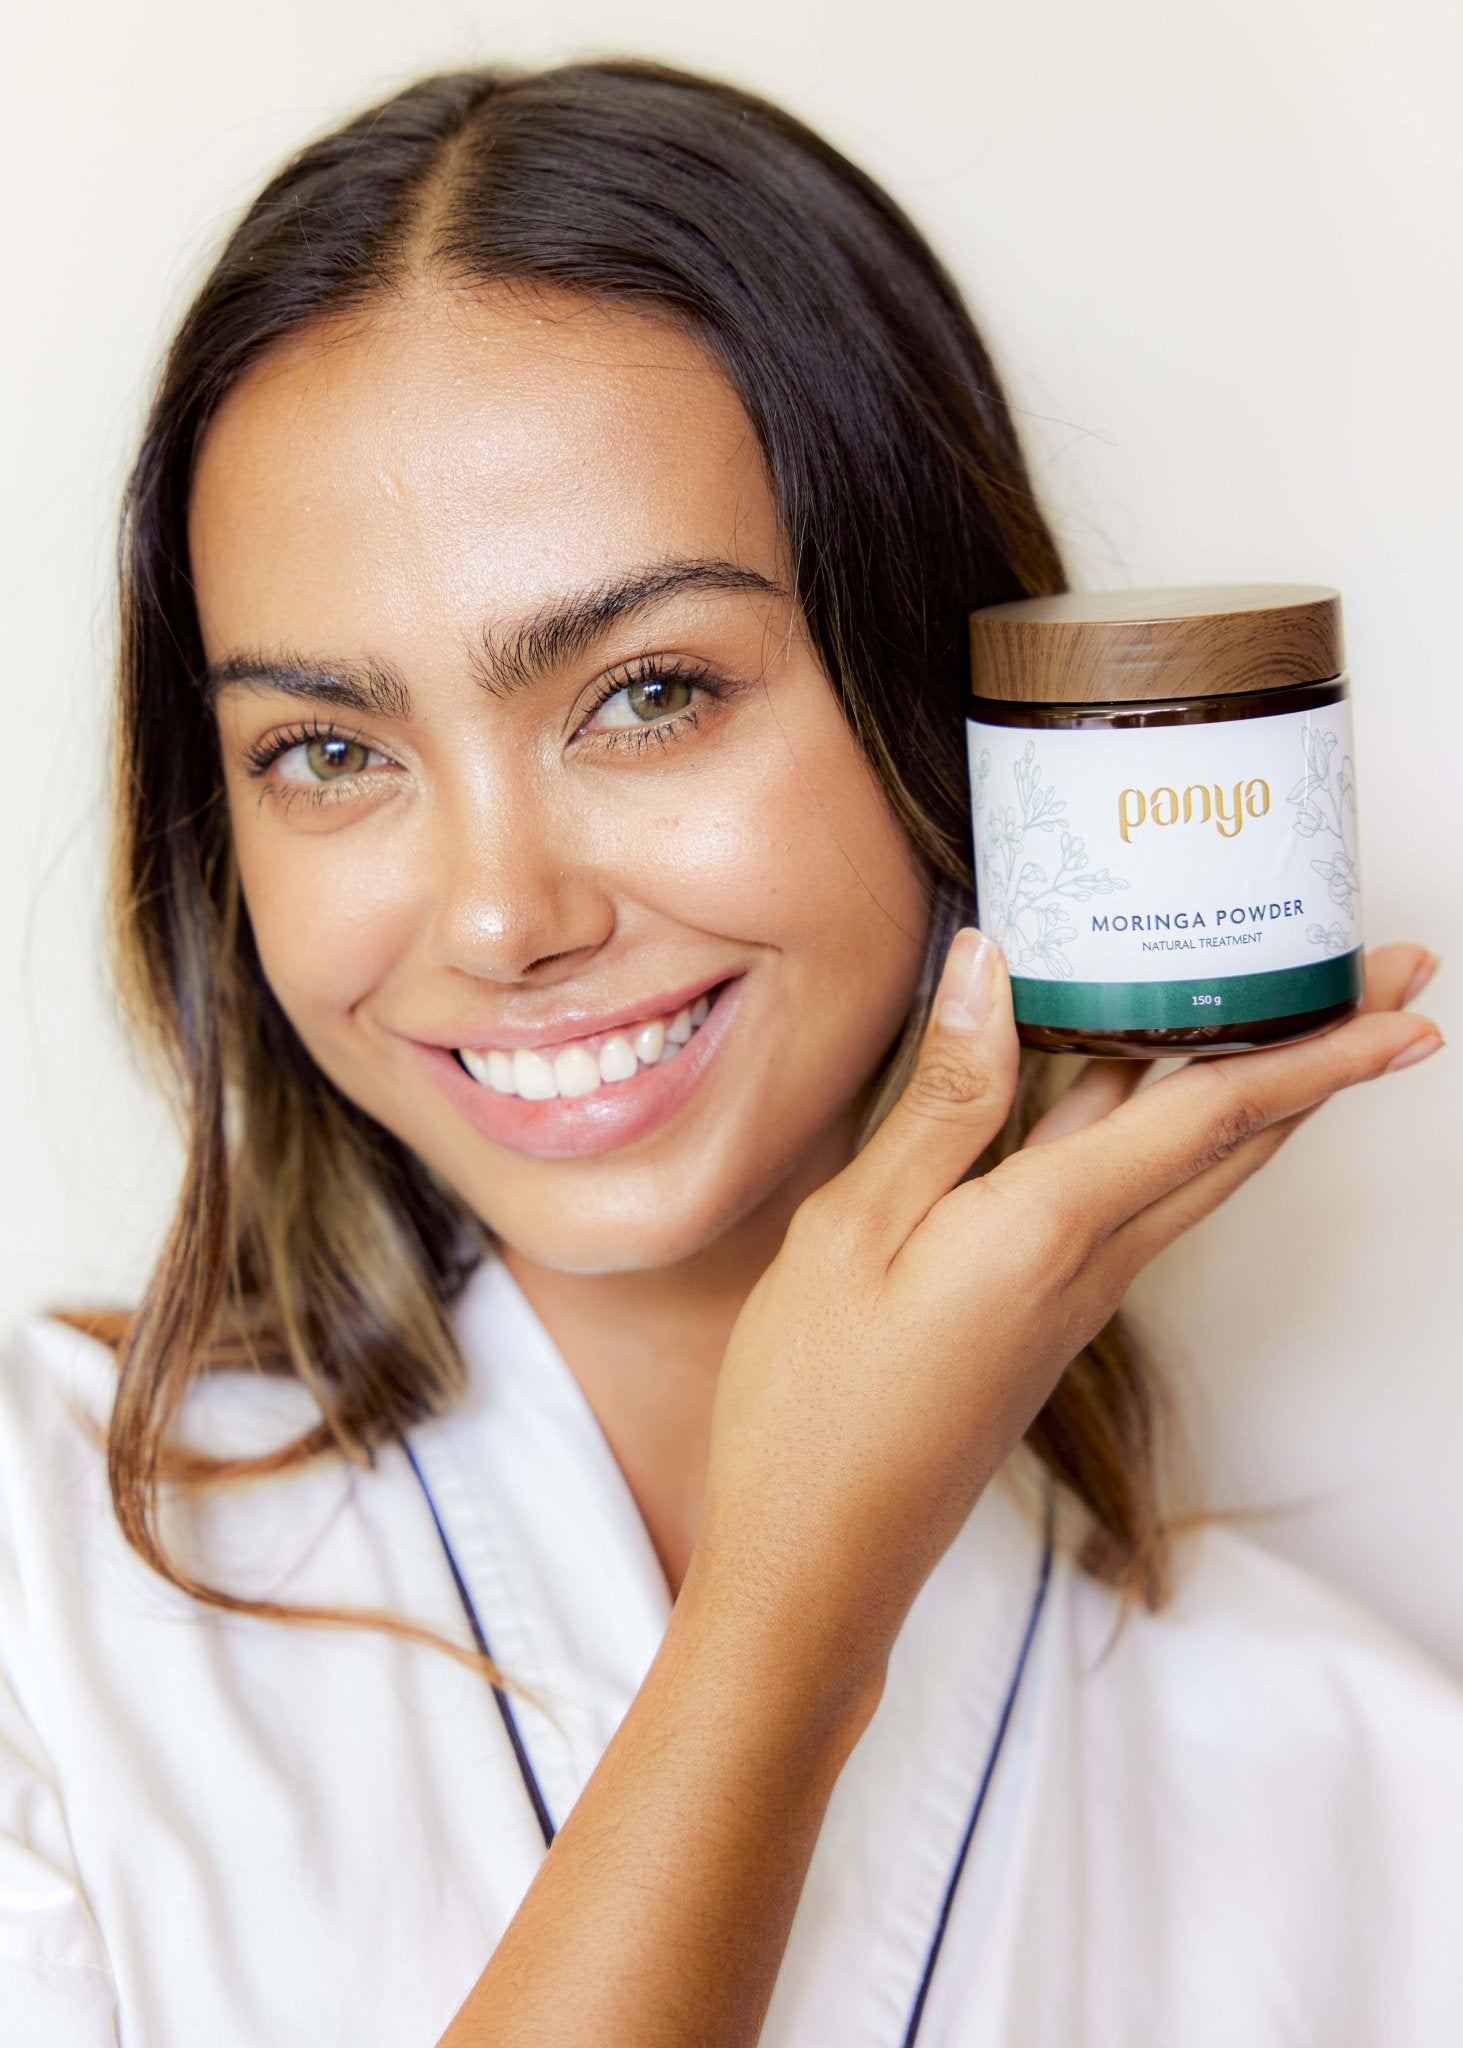 Panya Moringa Powder Supplement: vegan, 100% finely ground leaves for immune system boosting, anti-inflammatory properties and abundant antioxidants.